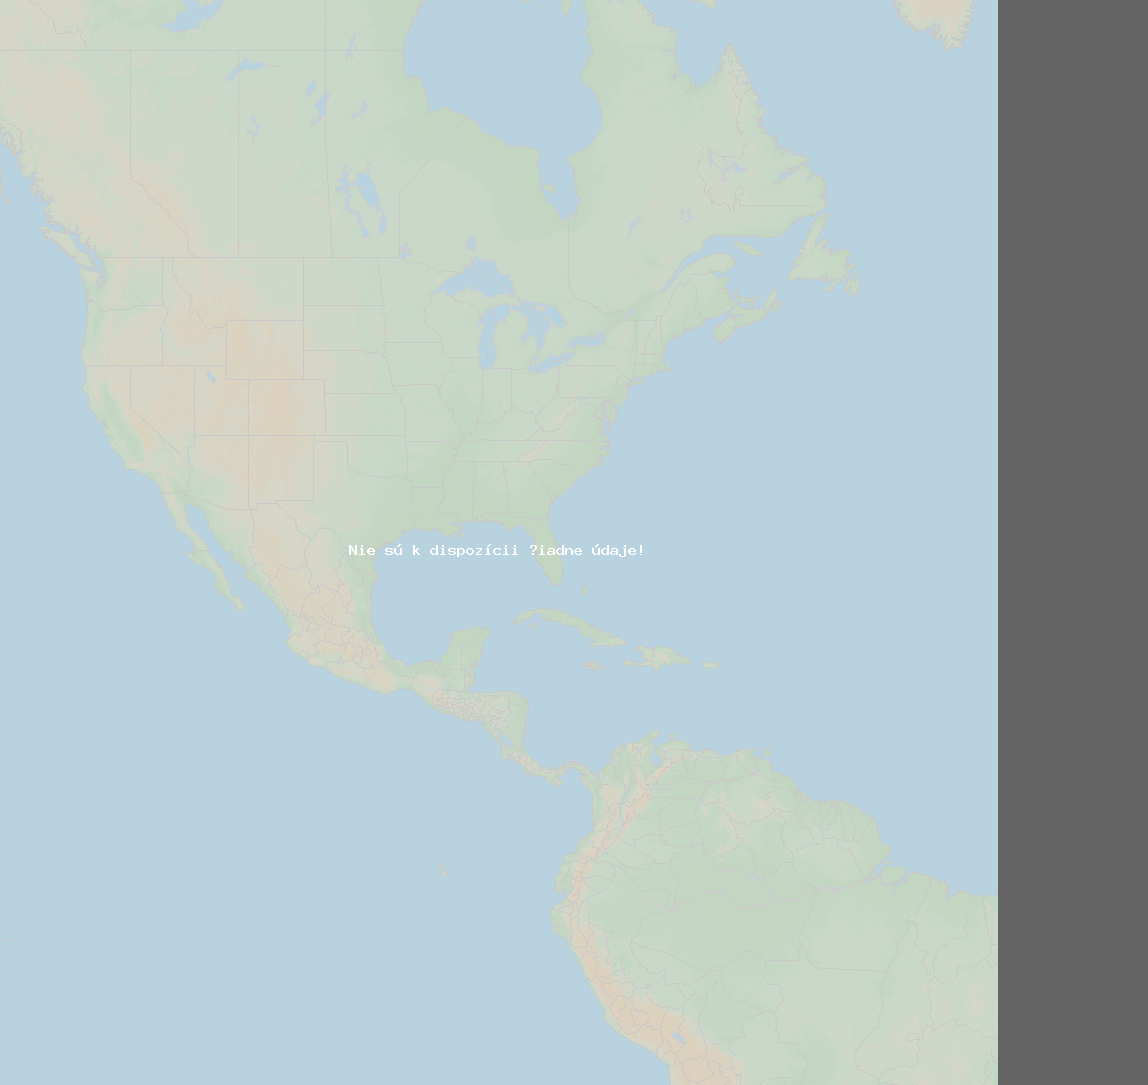 Pomer bleskov (Stanica Urbana) North America 2021 